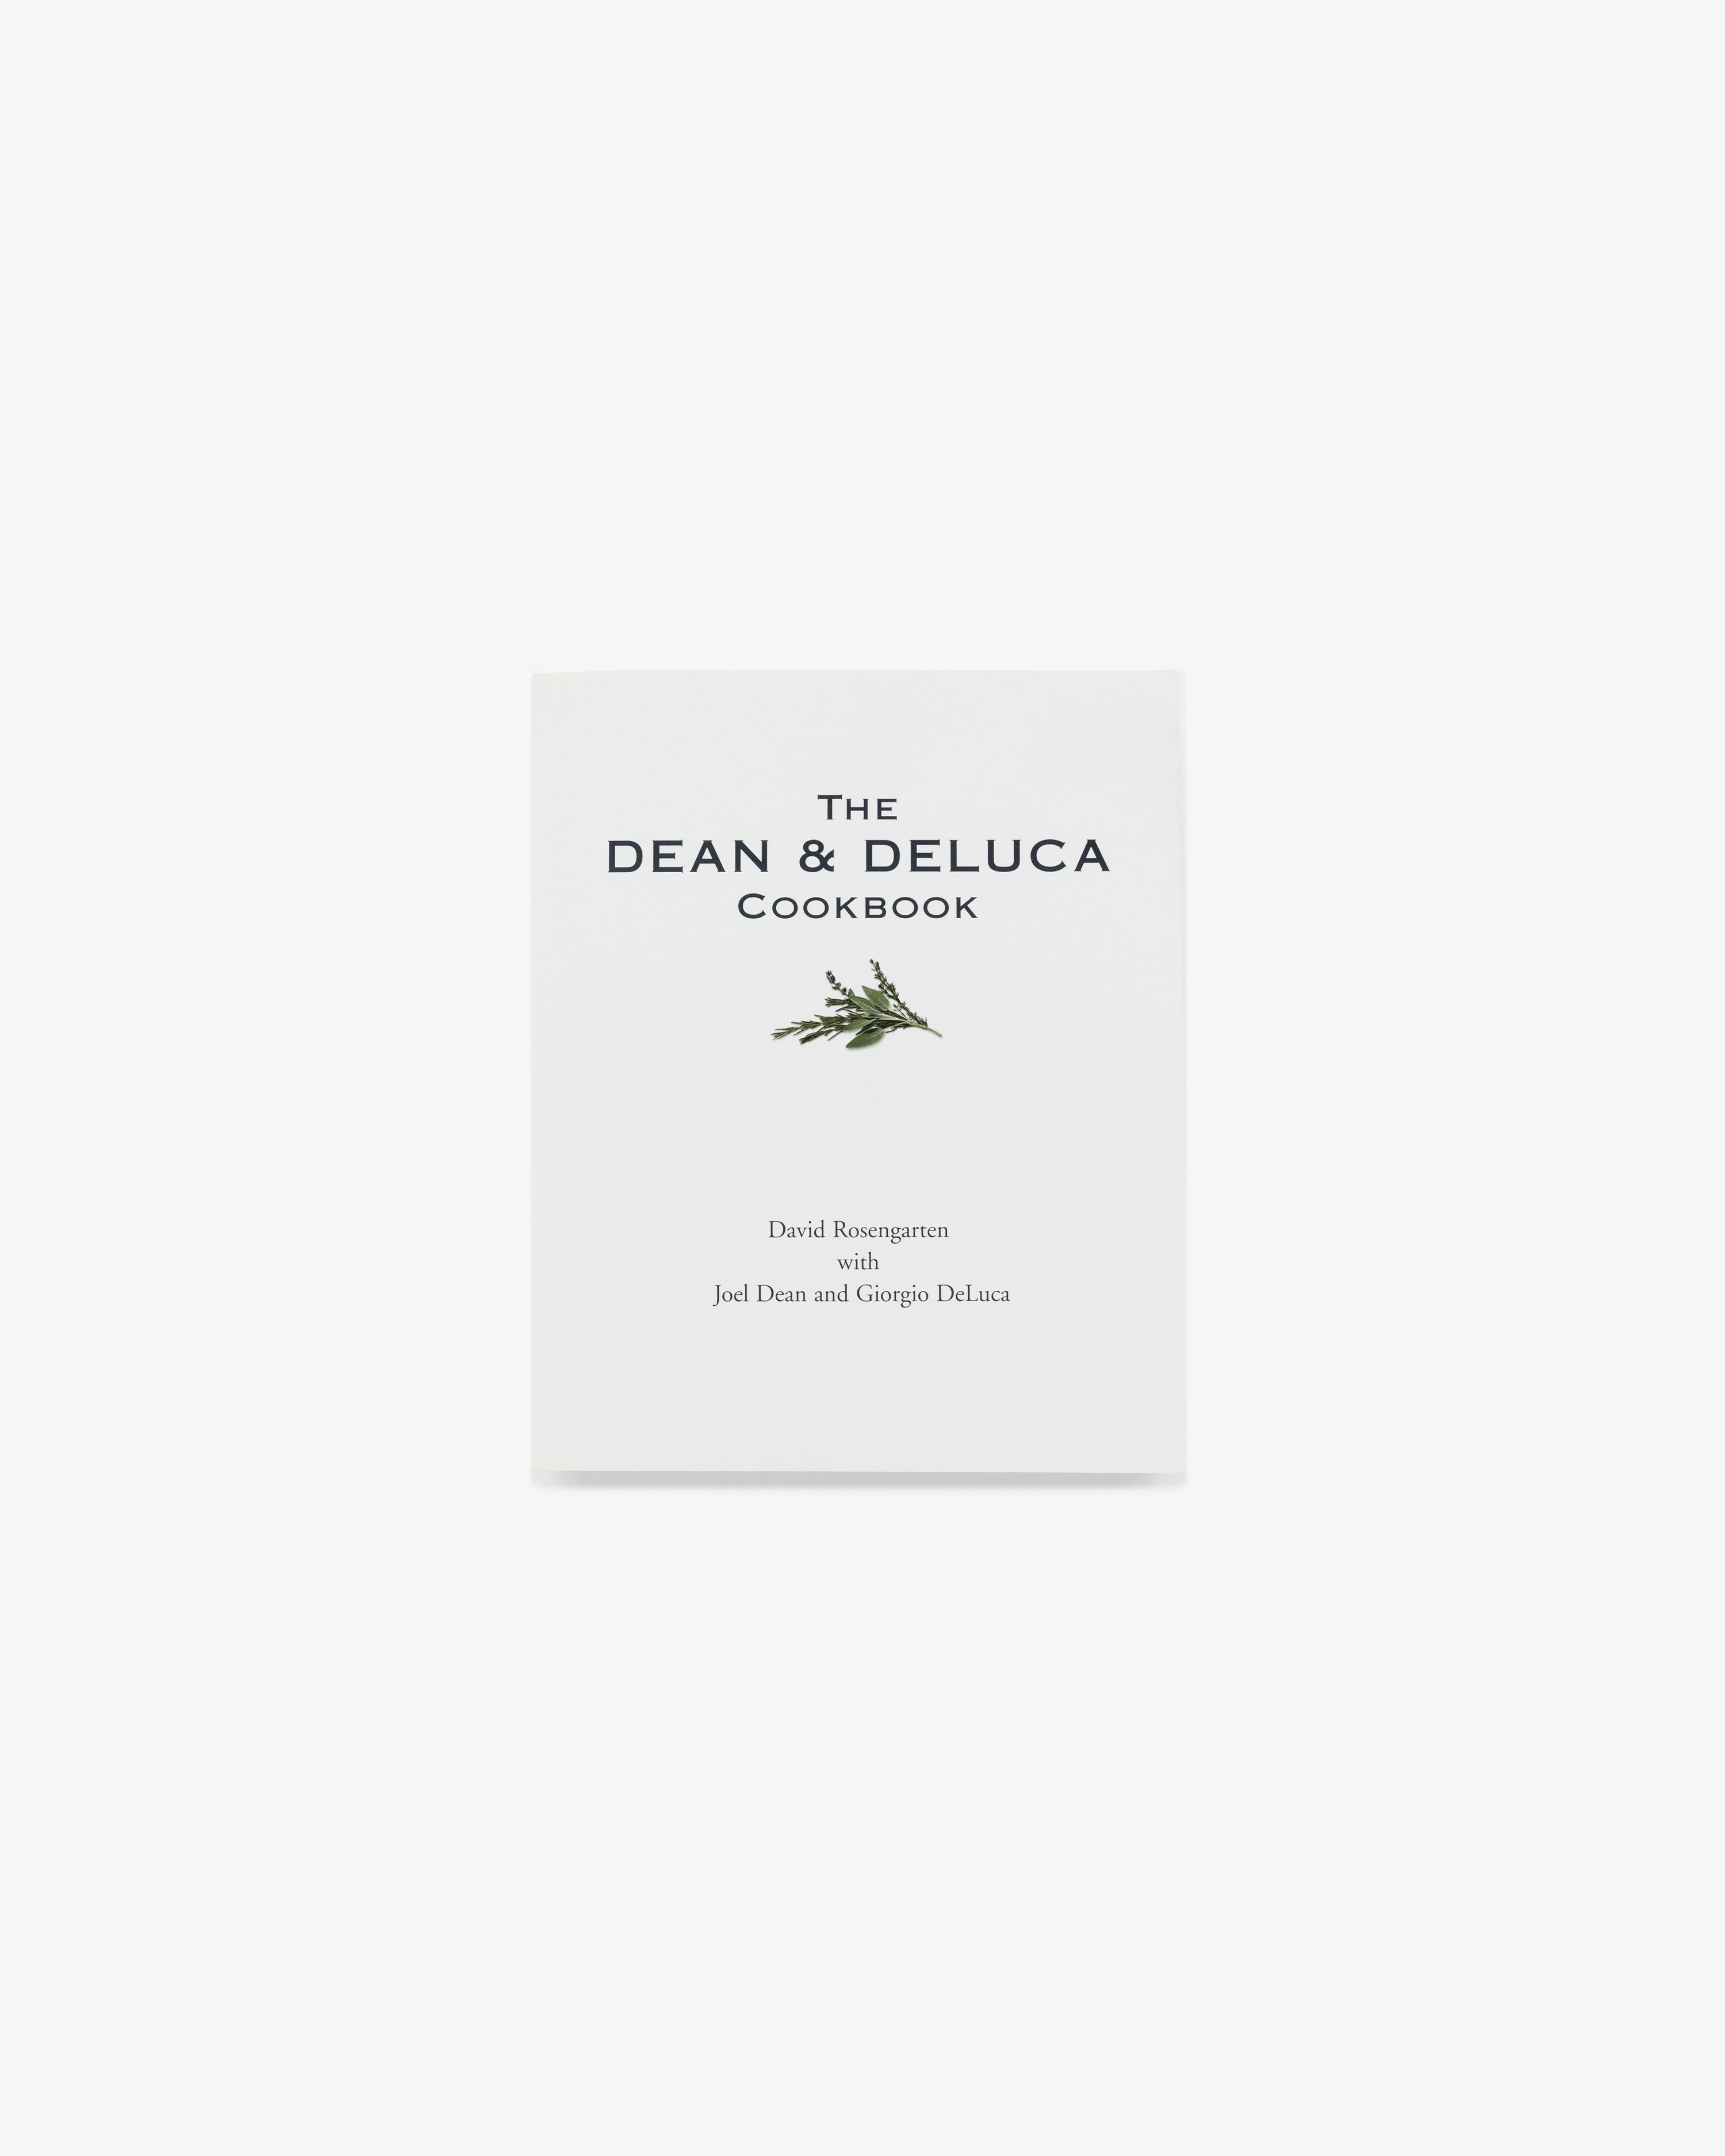 The Dean & Deluca Cookbook